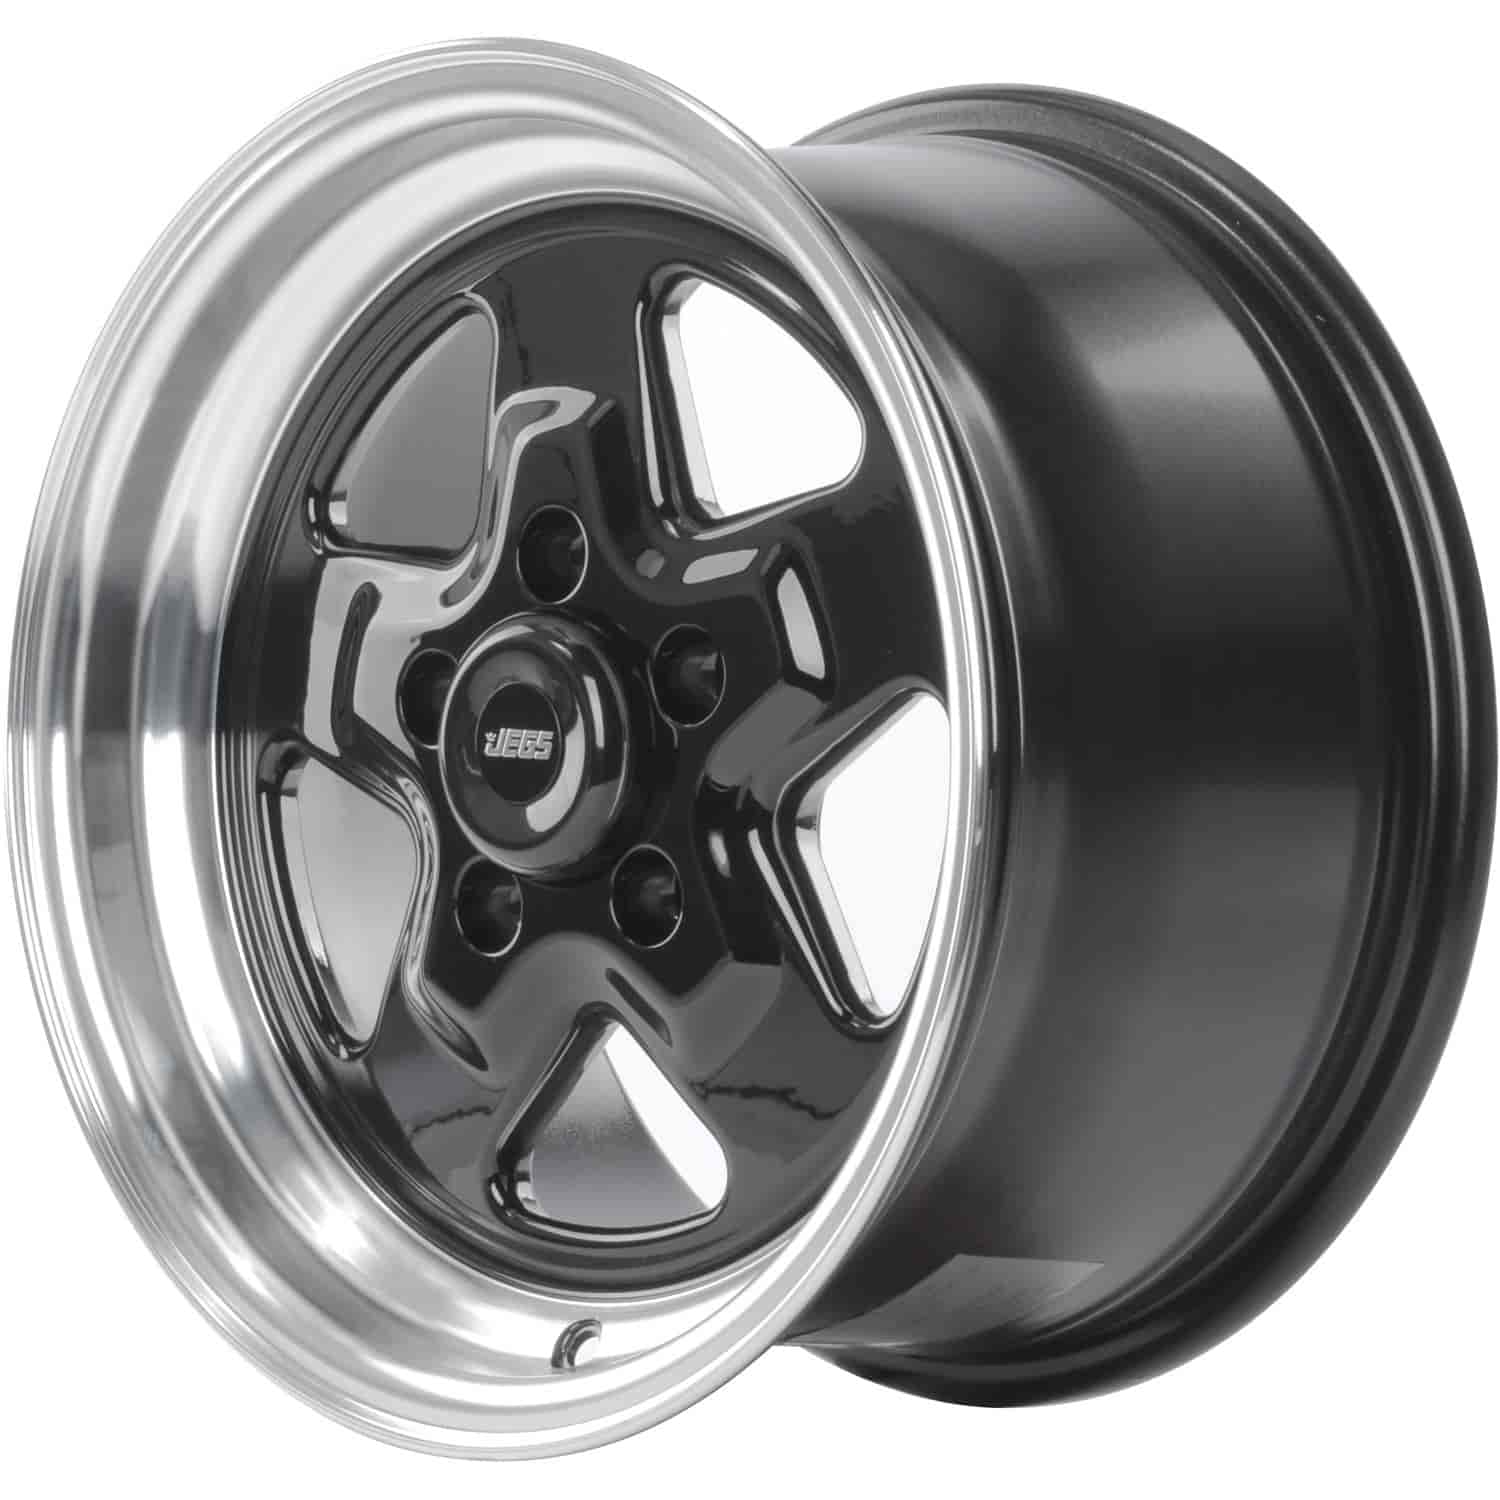 Sport Star 5-Spoke Wheel [Size: 15" x 8"] Polished Lip with Black Spokes